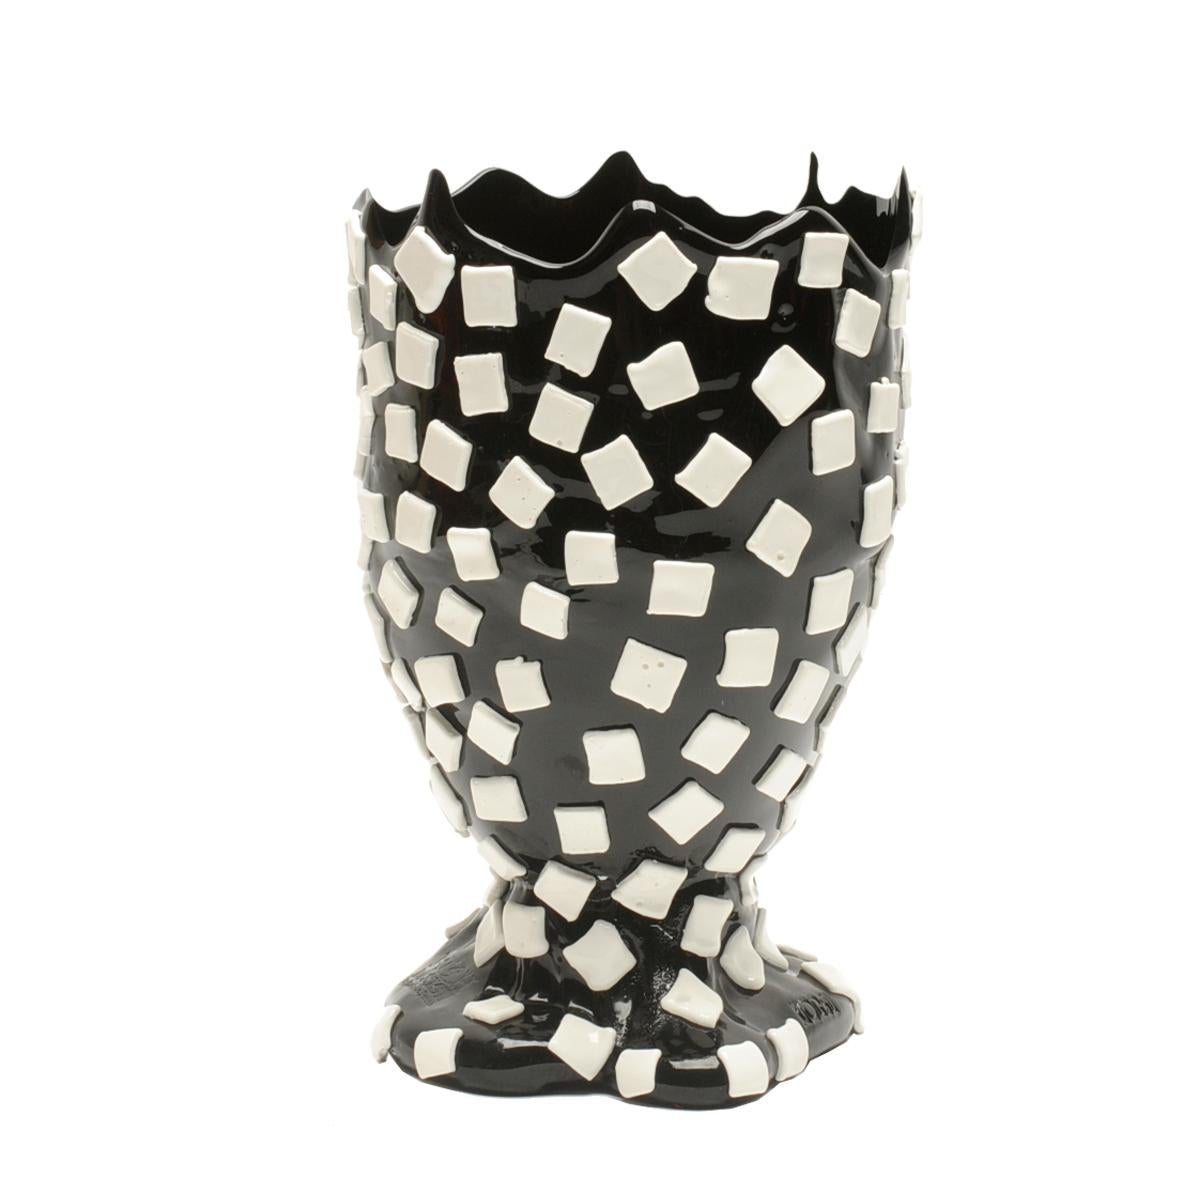 Rock vase - clear antique matt black and white.

Vase in soft resin designed by Gaetano Pesce in 1995 for Fish Design collection.

Measures: M - ø 16cm x H 26cm

Dimensions Available:
S - ø 10.5cm x H 19cm
M - ø 16cm x H 26cm
L - ø 22cm x H